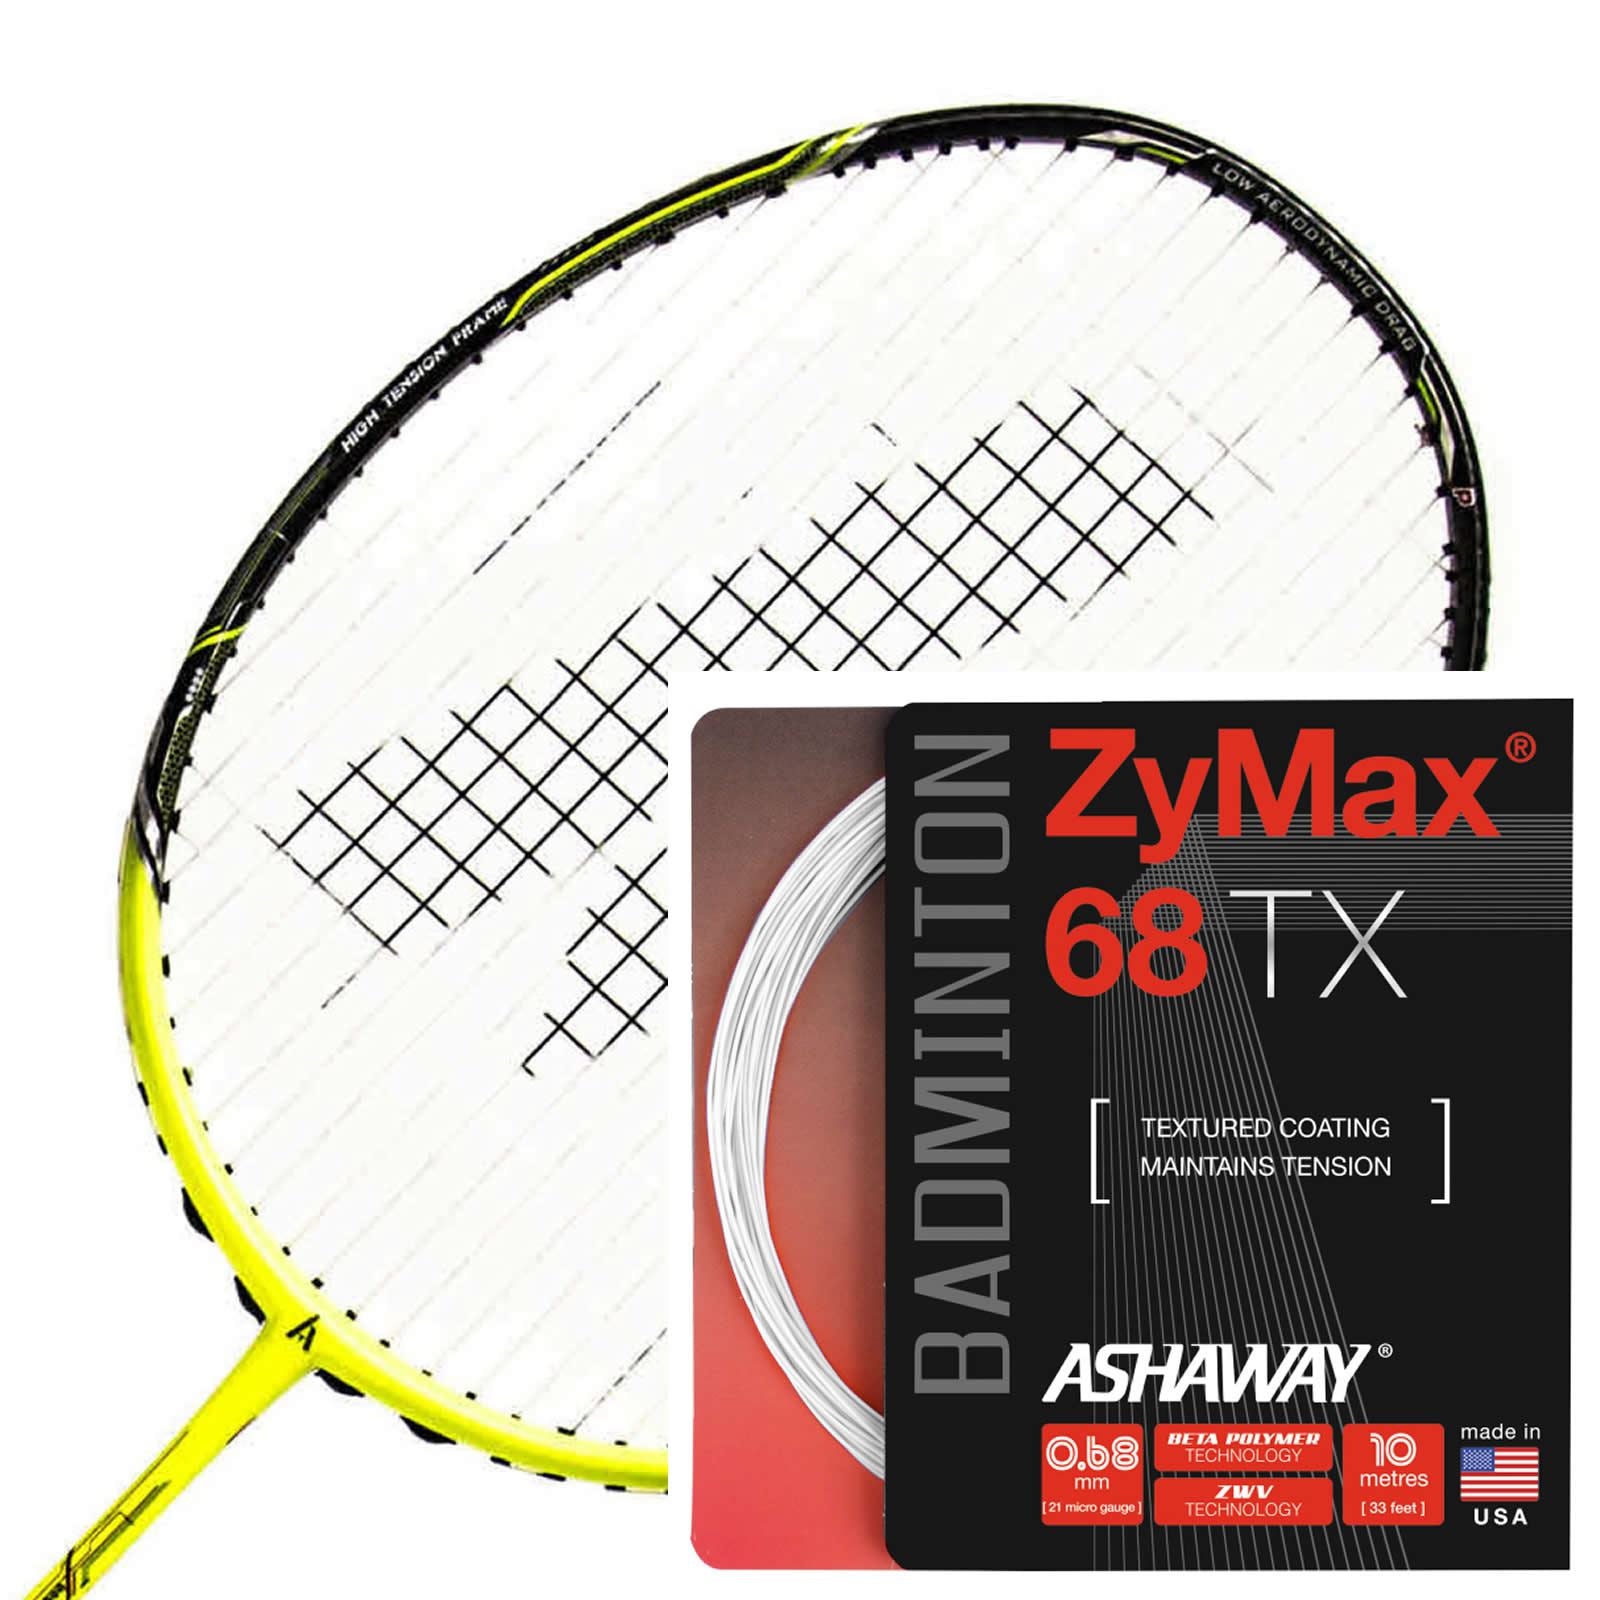 Ashaway Zymax 68 TX Badminton String White - 0.68MM - 10m Packet